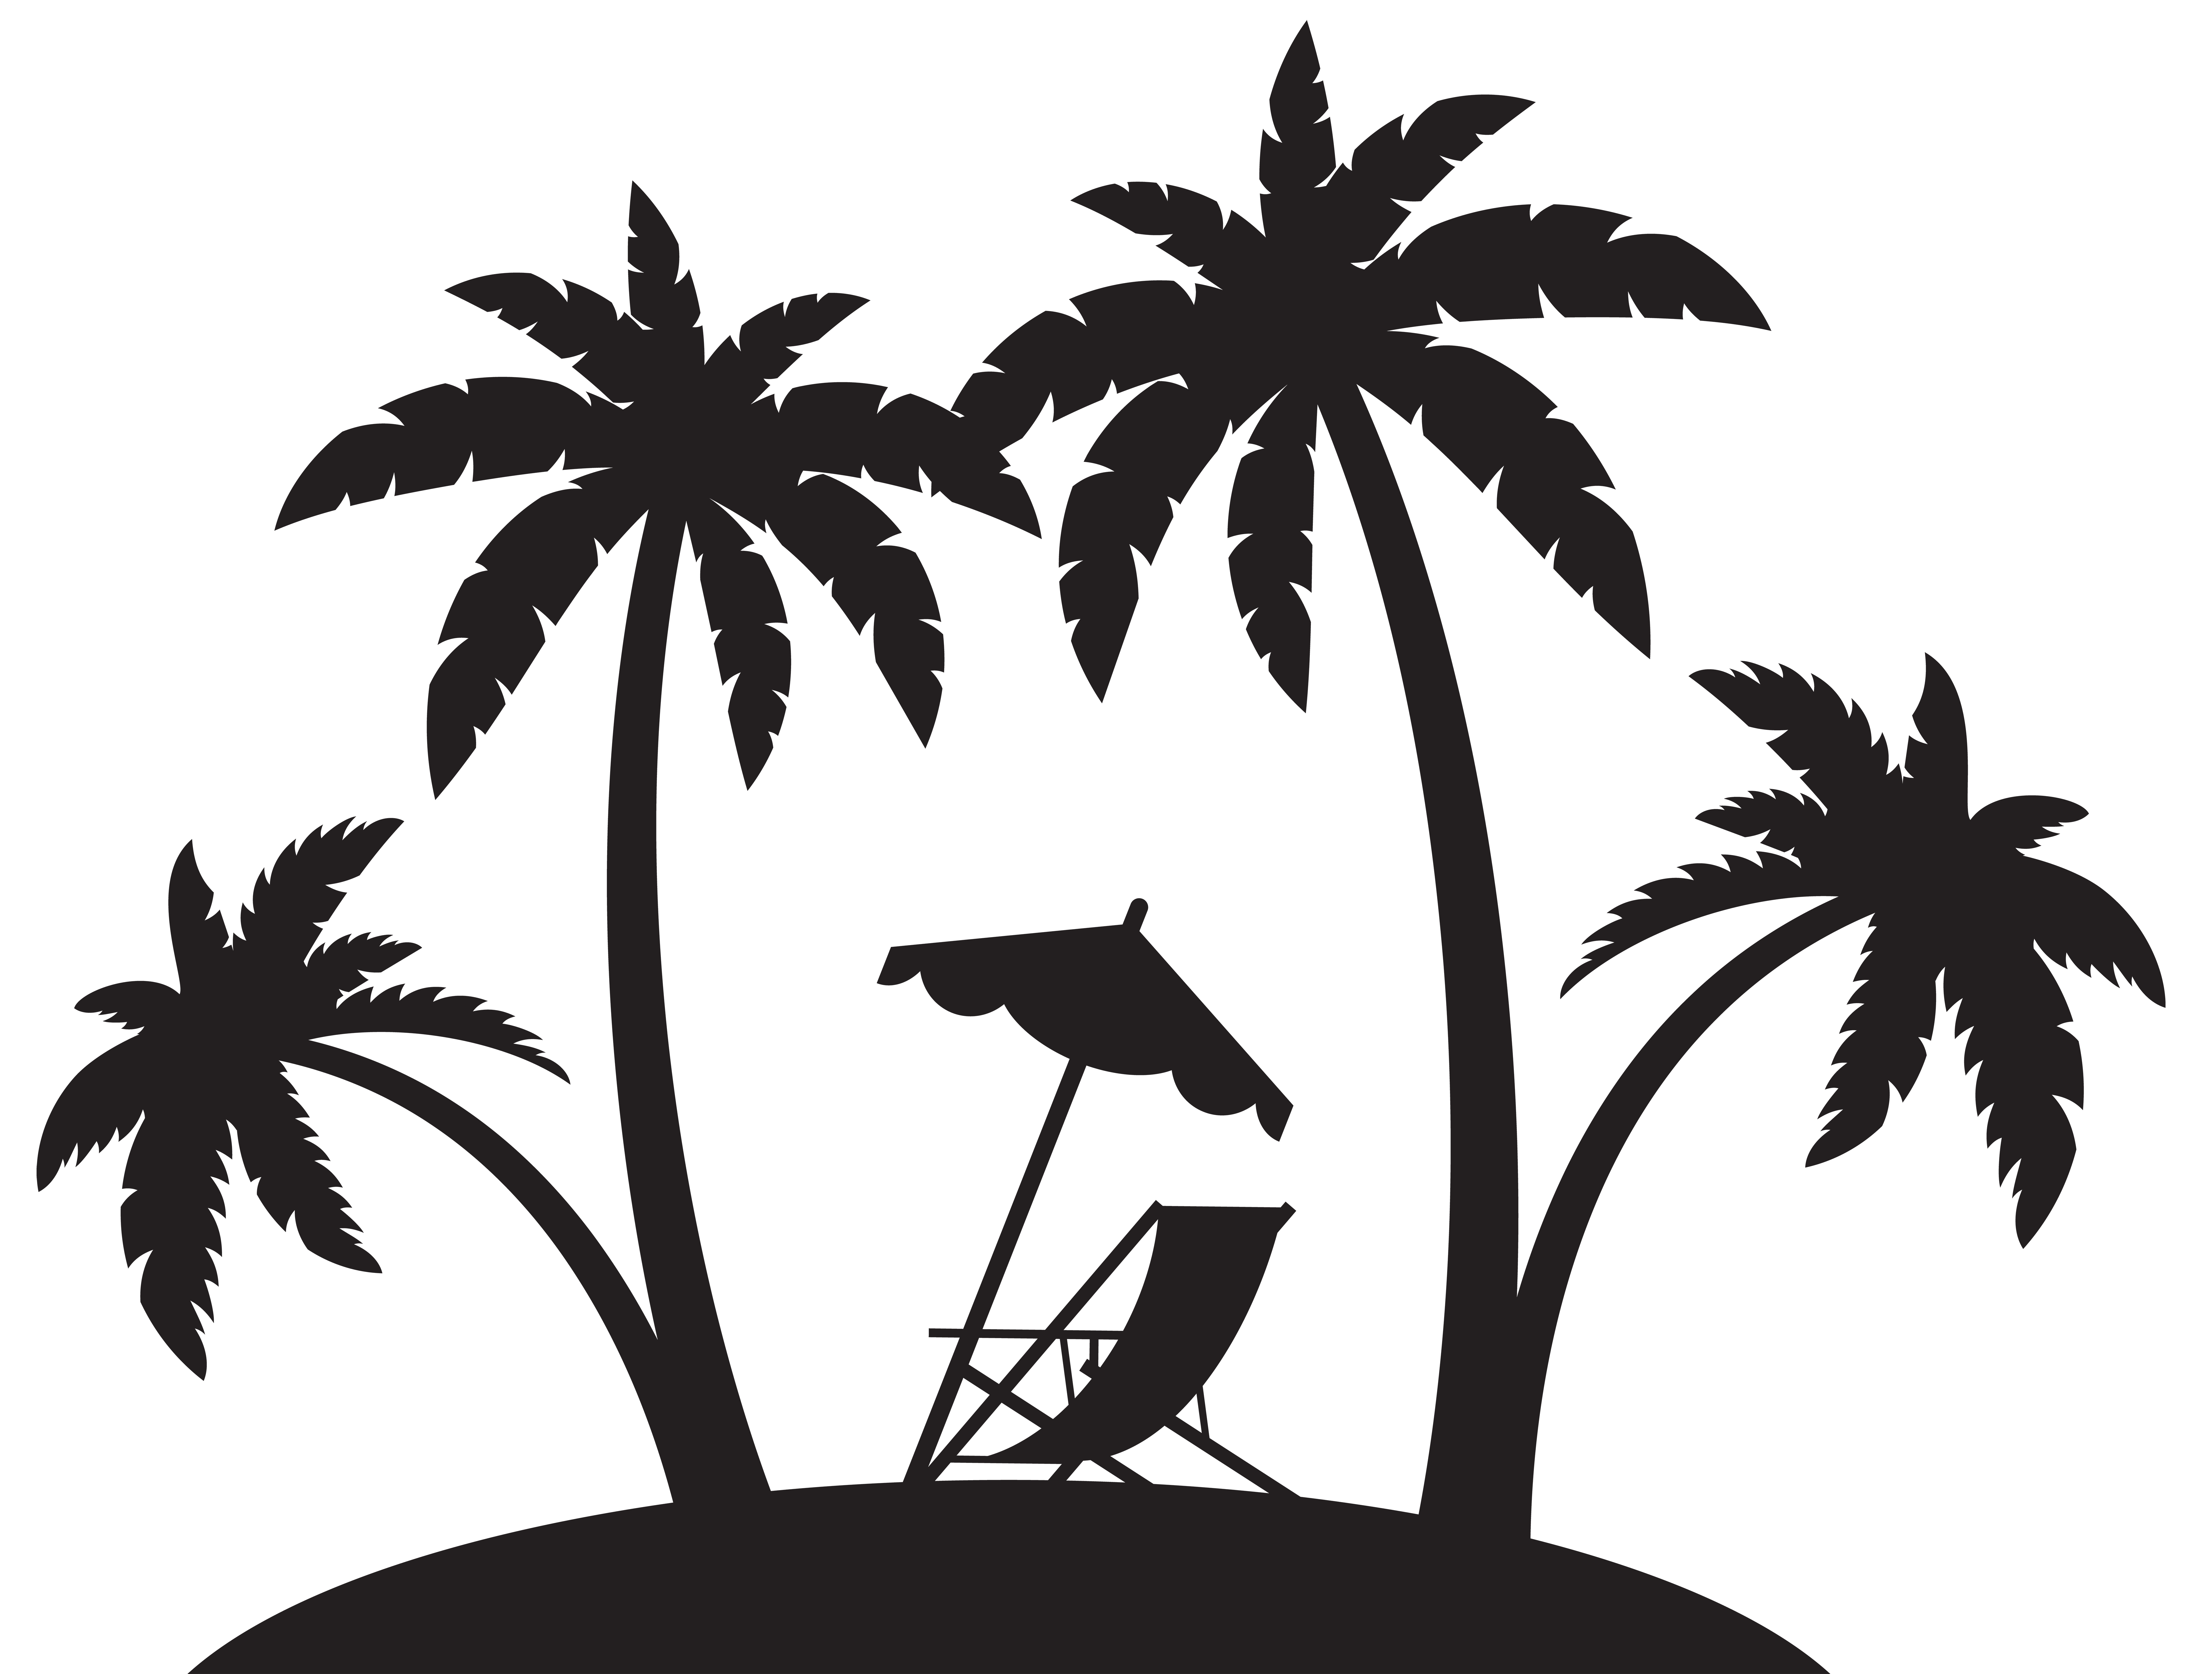 beach palm tree silhouette
